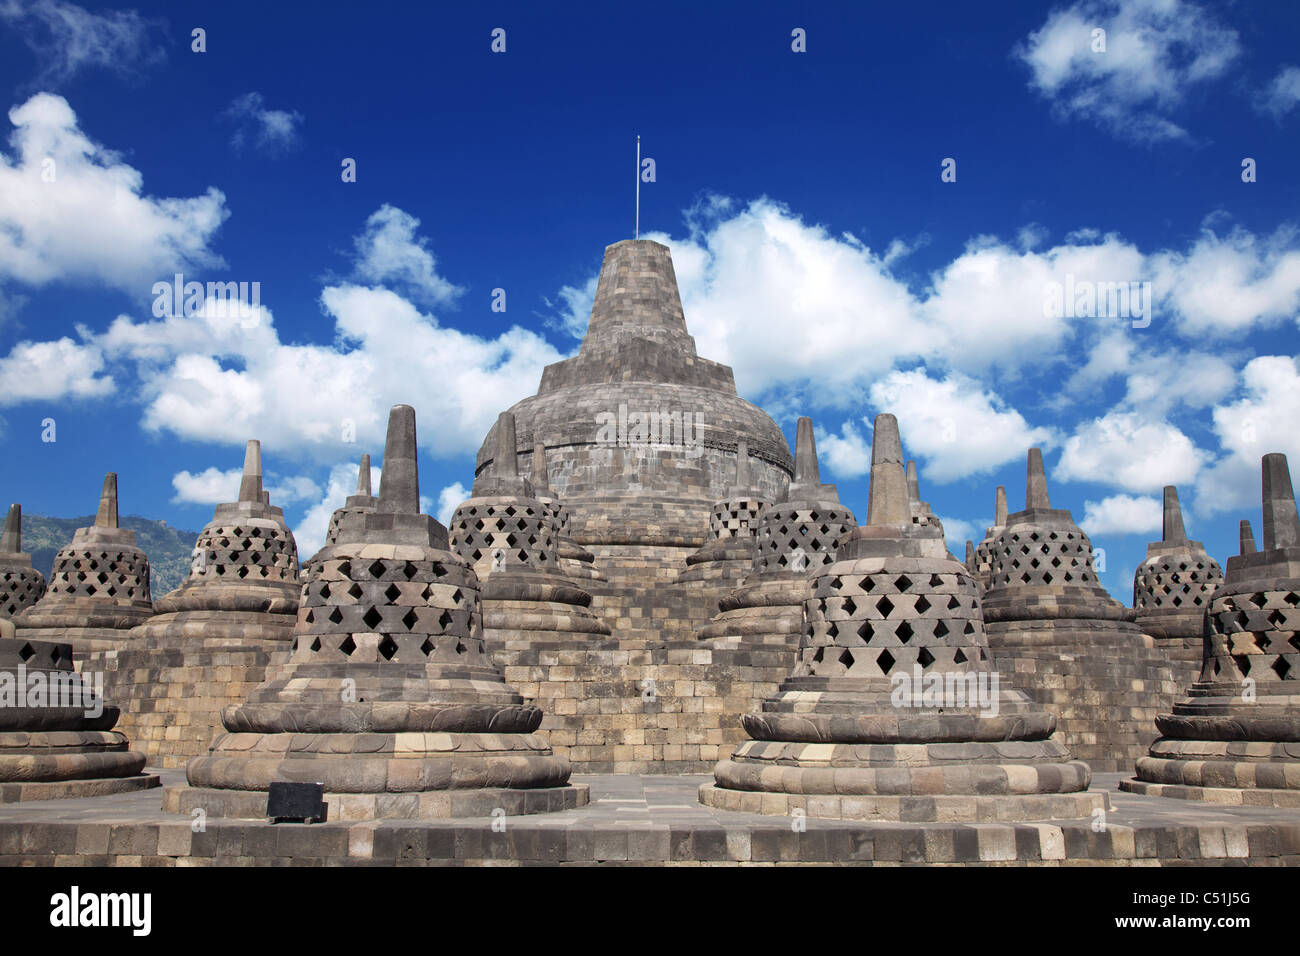 Borobudur temple located close to Yogyakarta in Java Indonesia